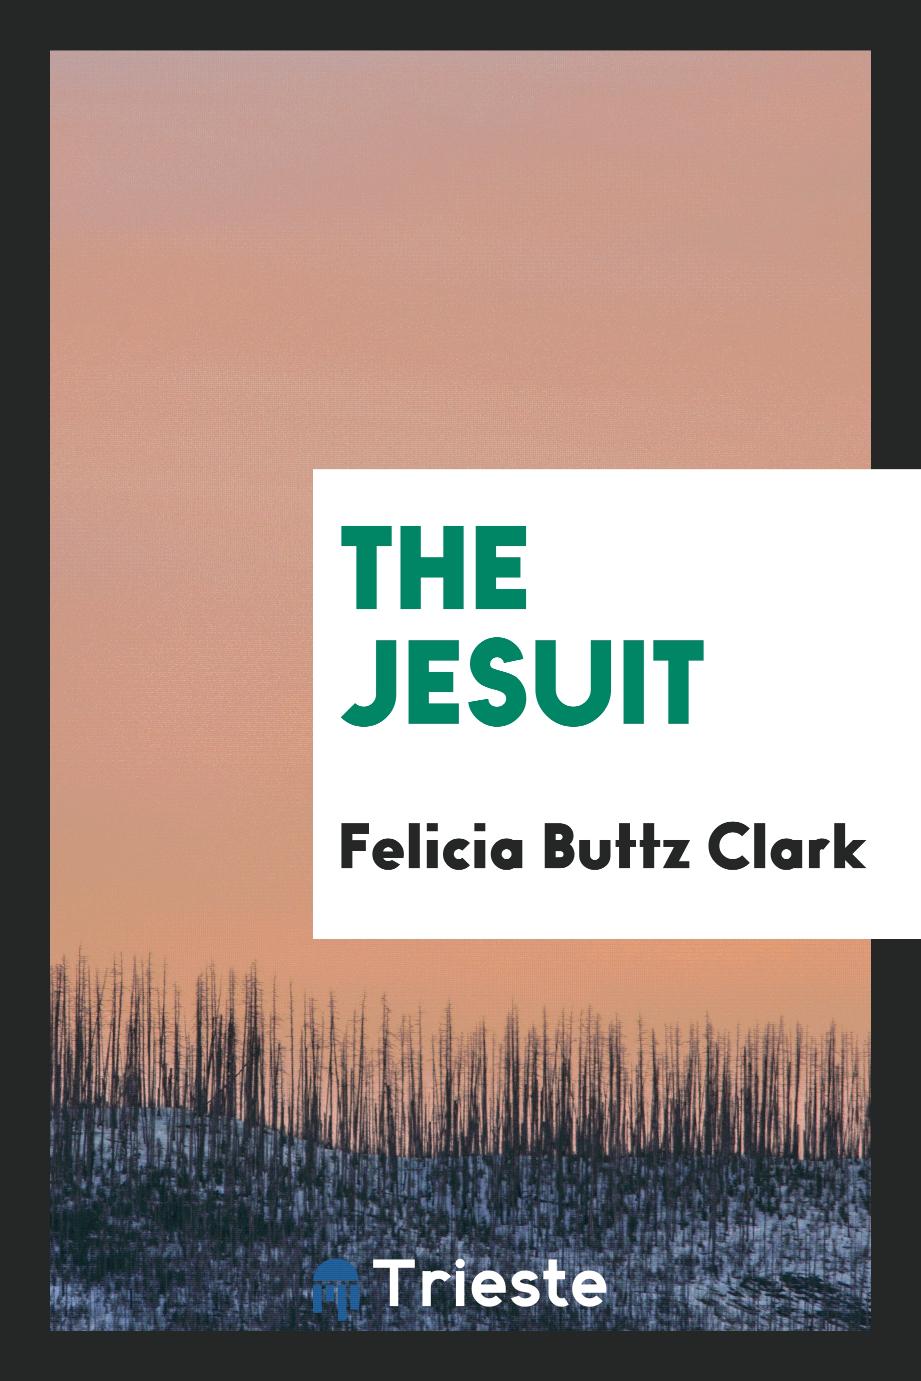 The Jesuit